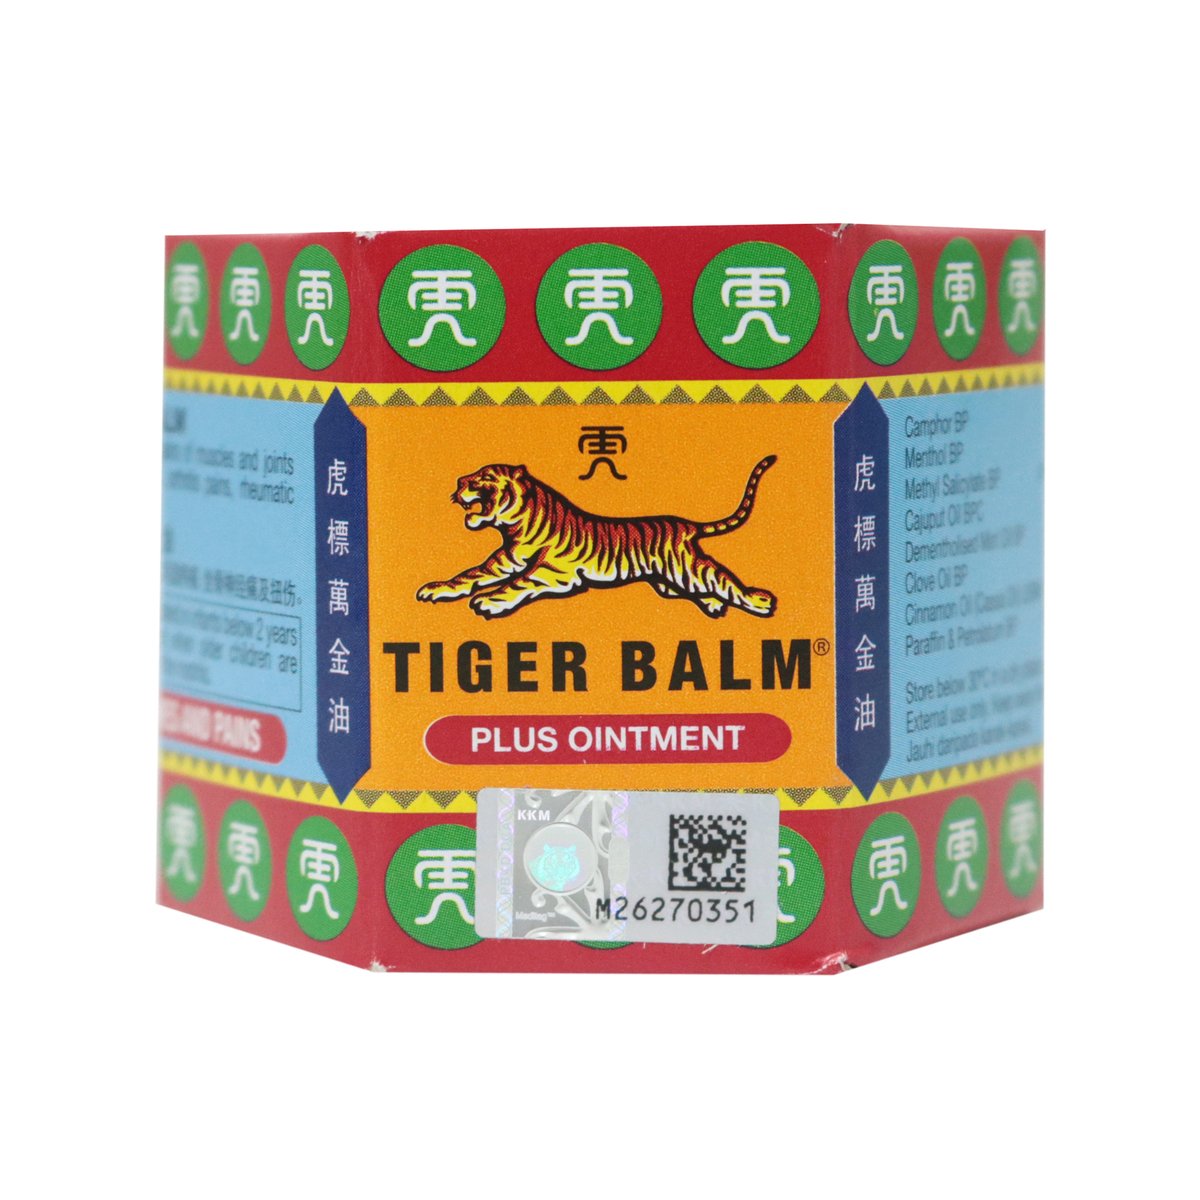 Tiger Balm Plus Ointment 19g